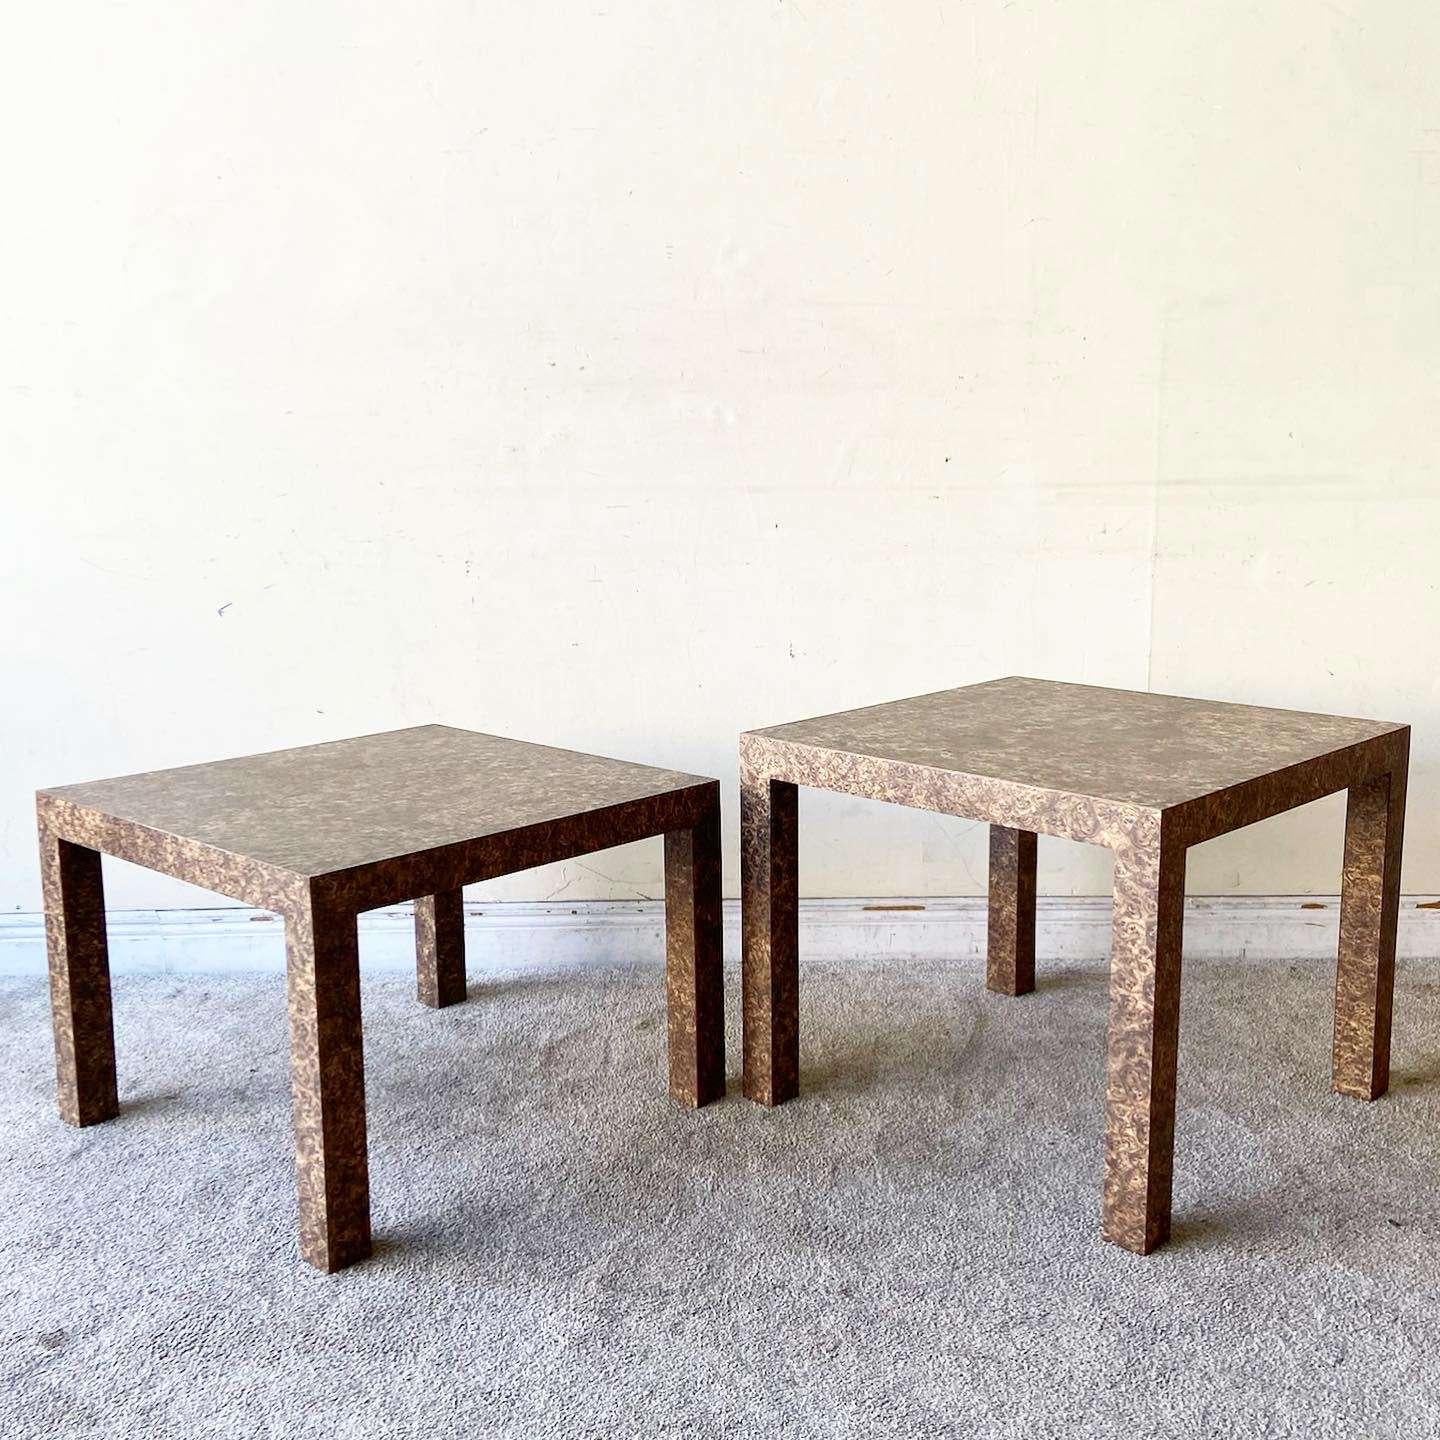 Exceptional vintage postmodern ascending parsons side tables. Each feature a darker burlwood laminate.

Shorter table measures 19.5”H